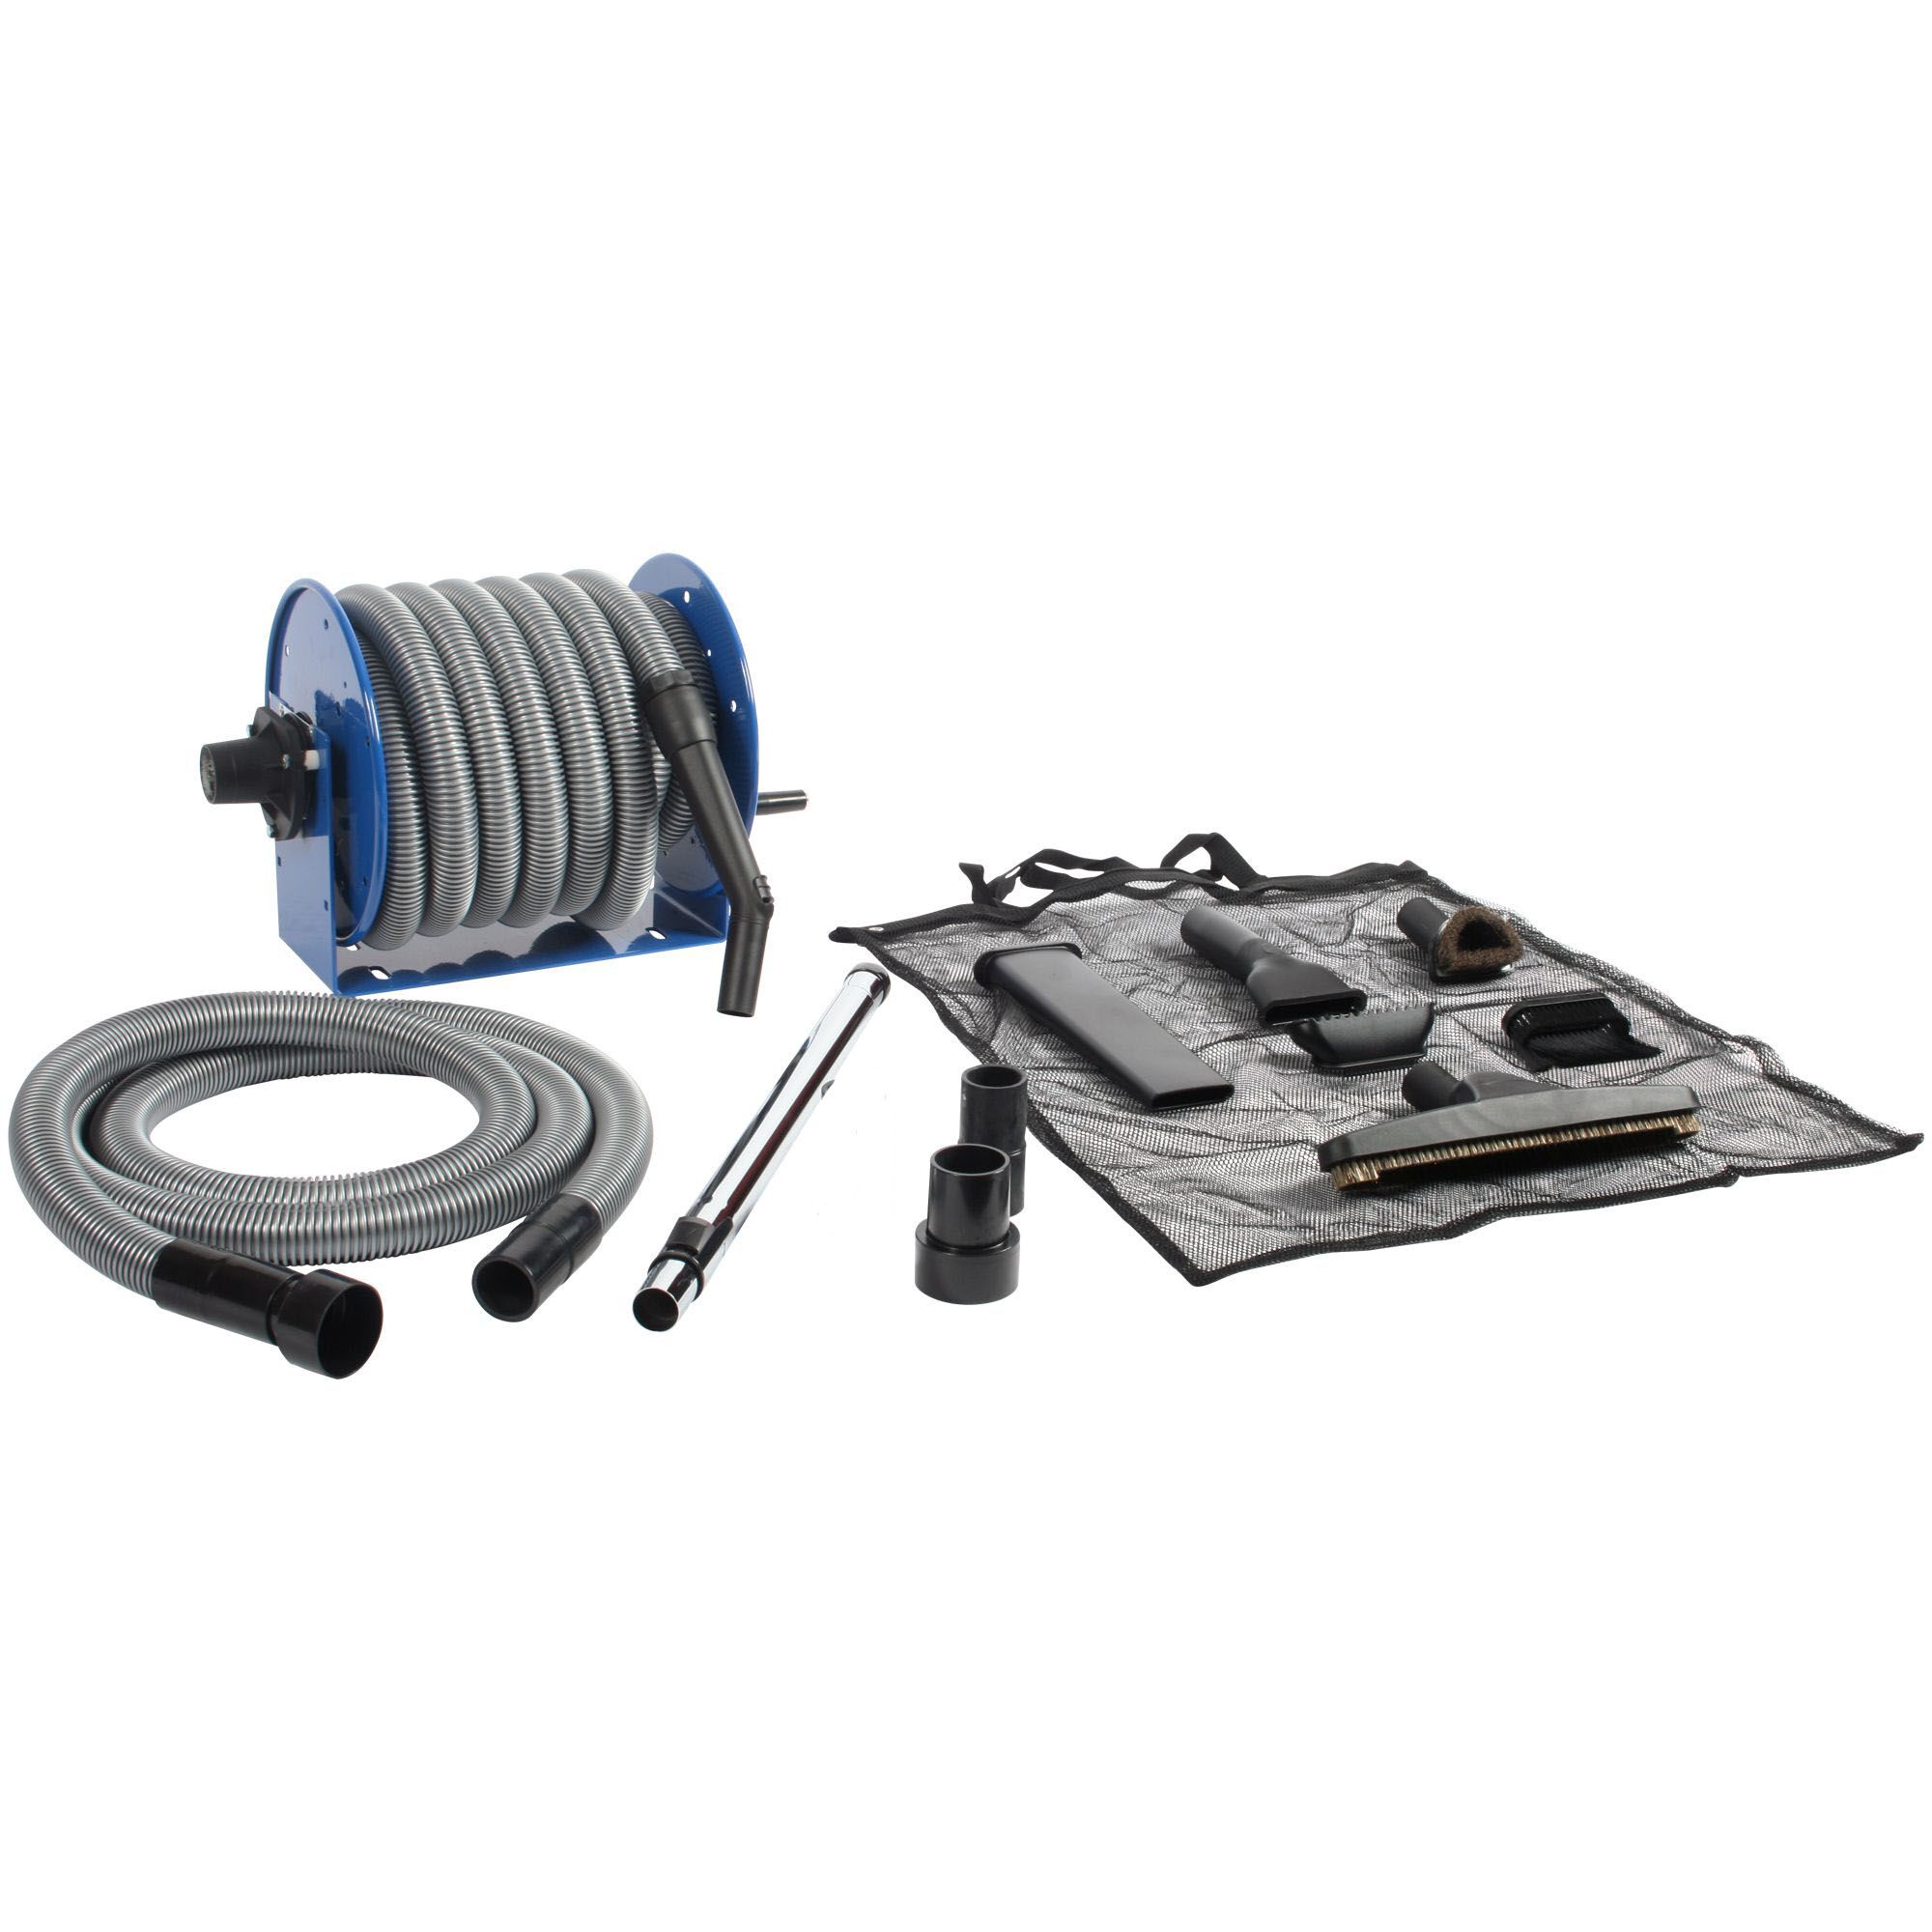 Valet and Car Detailing Vacuum Hose Reel Kit